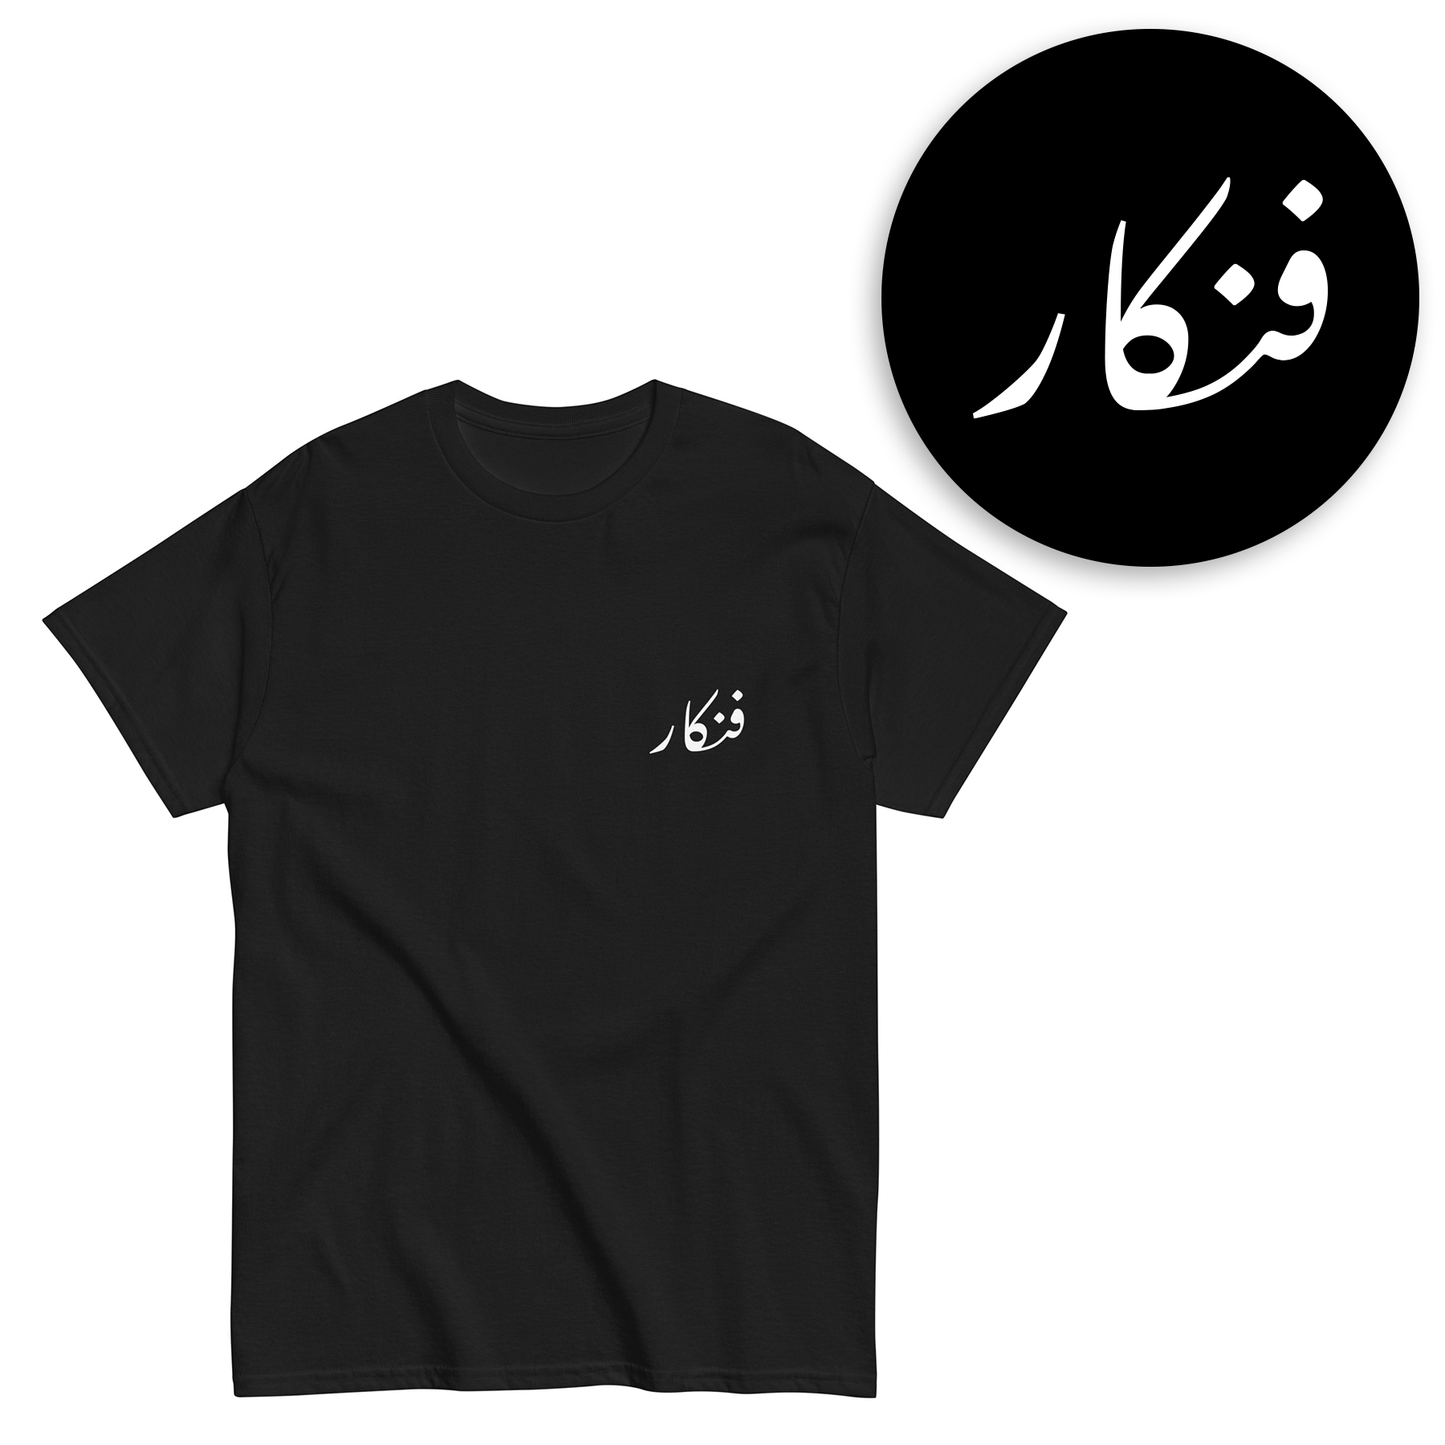 Urdu Words T-Shirts